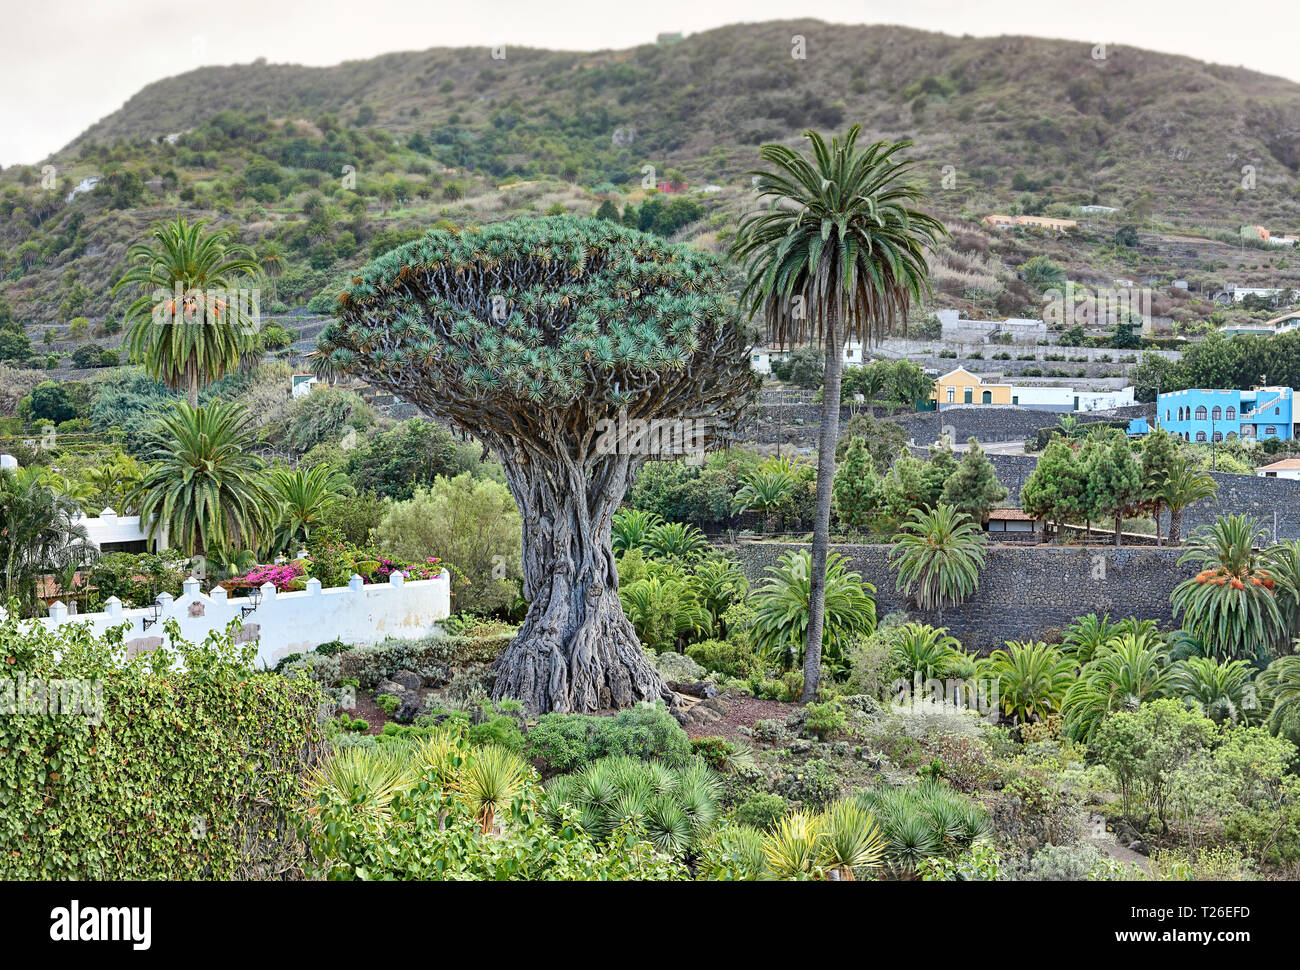 Berühmten Drachenbaum "Drago milenario" in Icod de los Vinos (Teneriffa, Kanarische Inseln) Stockfoto